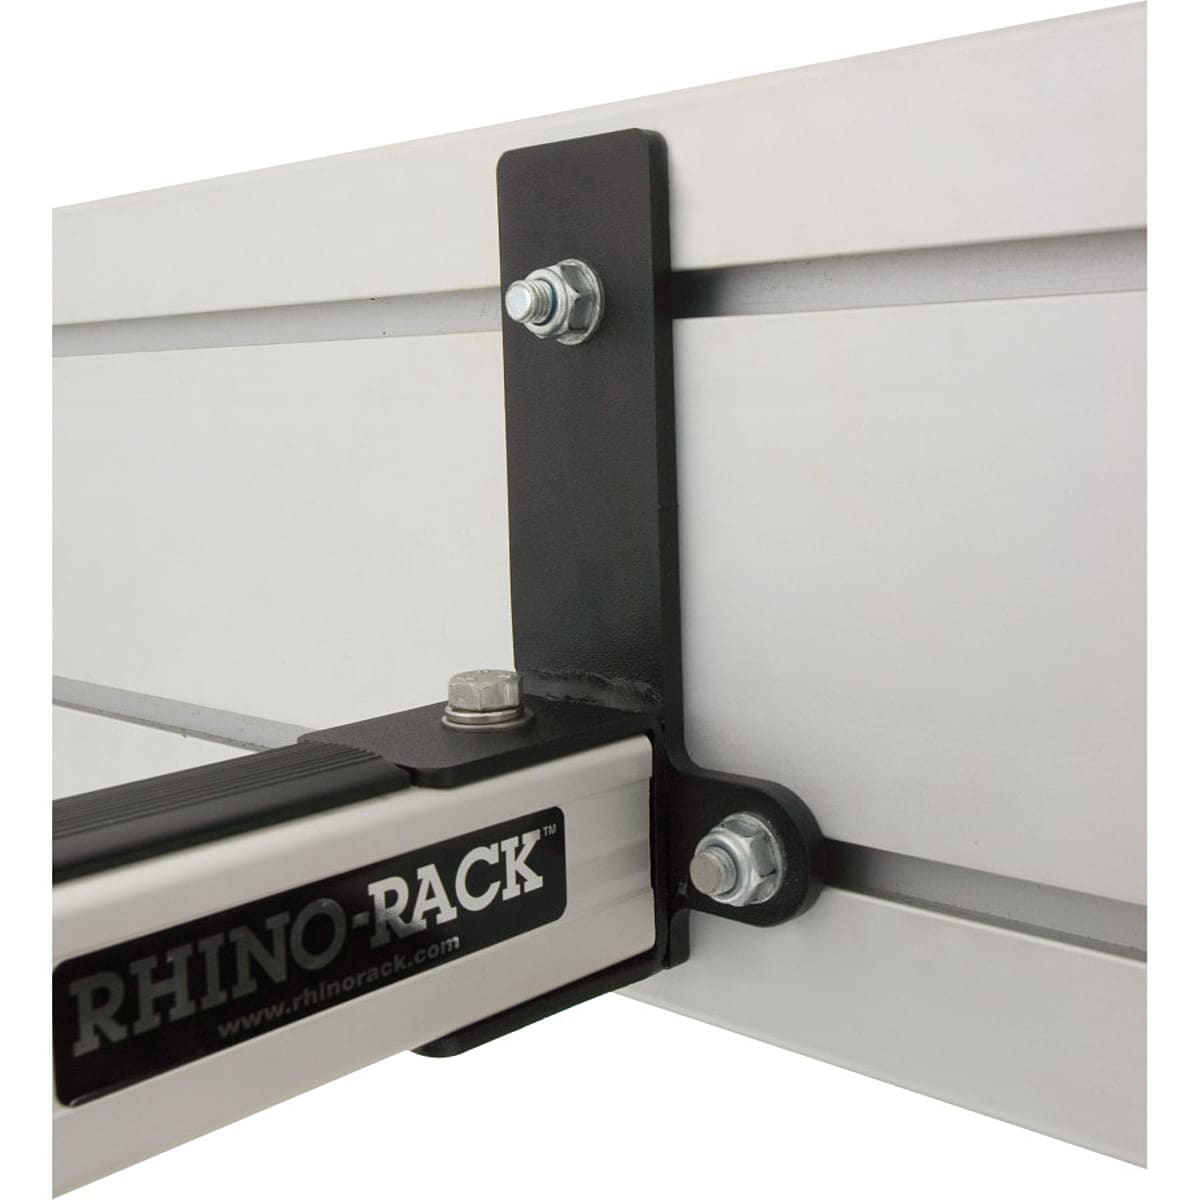 Rhino Rack Foxwing HD Bracket Fit Kit for Rhino Rack HD Bars